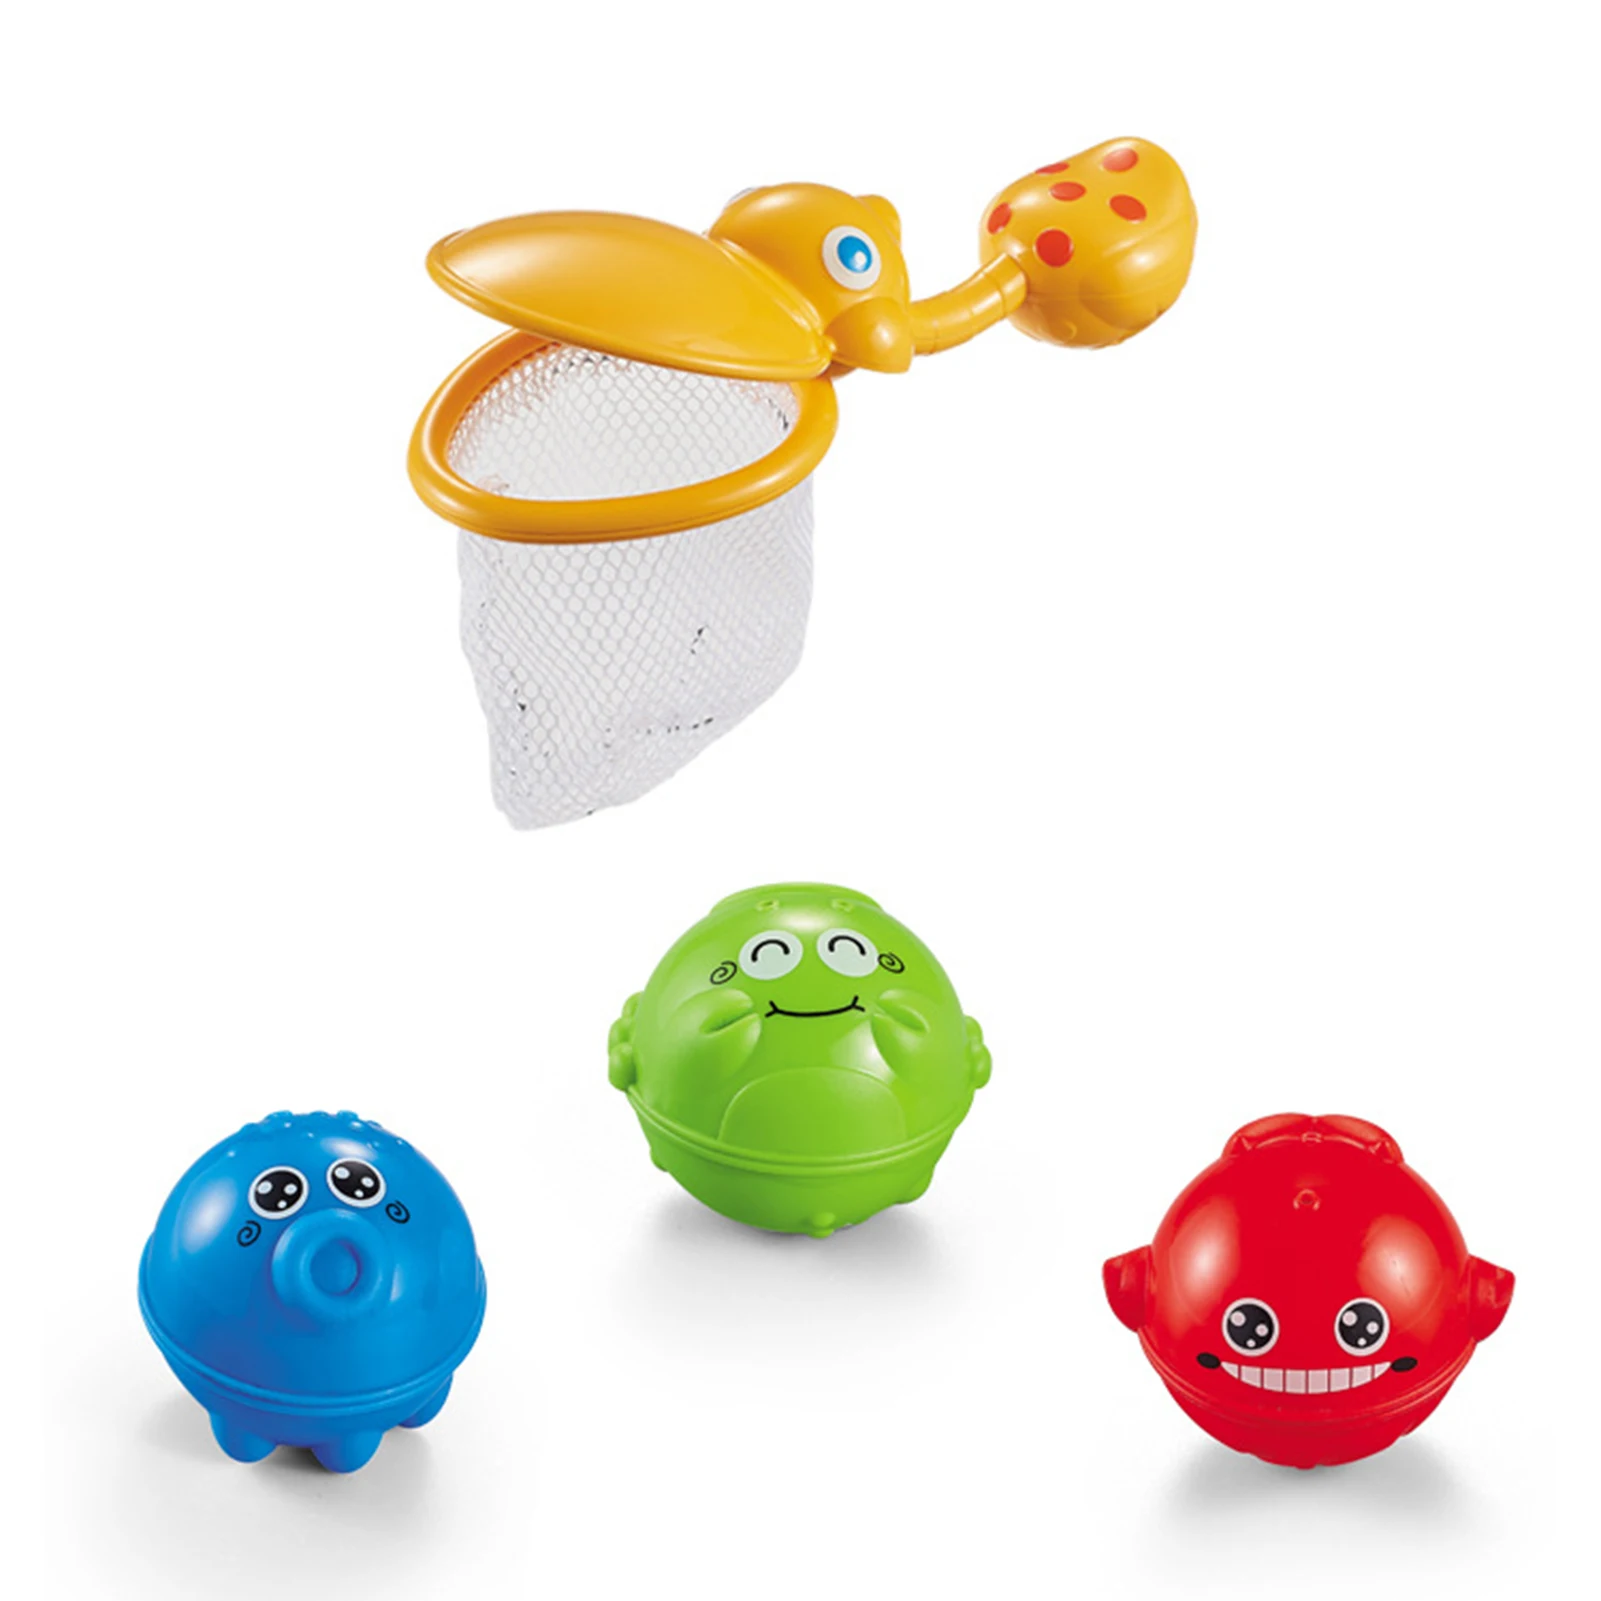 

Baby Bath Toys Plastic Children Safe Playing Cute Cartoon Water Animal Net Fishing Doll Bath Bathtub Water Toy For Infant Gift